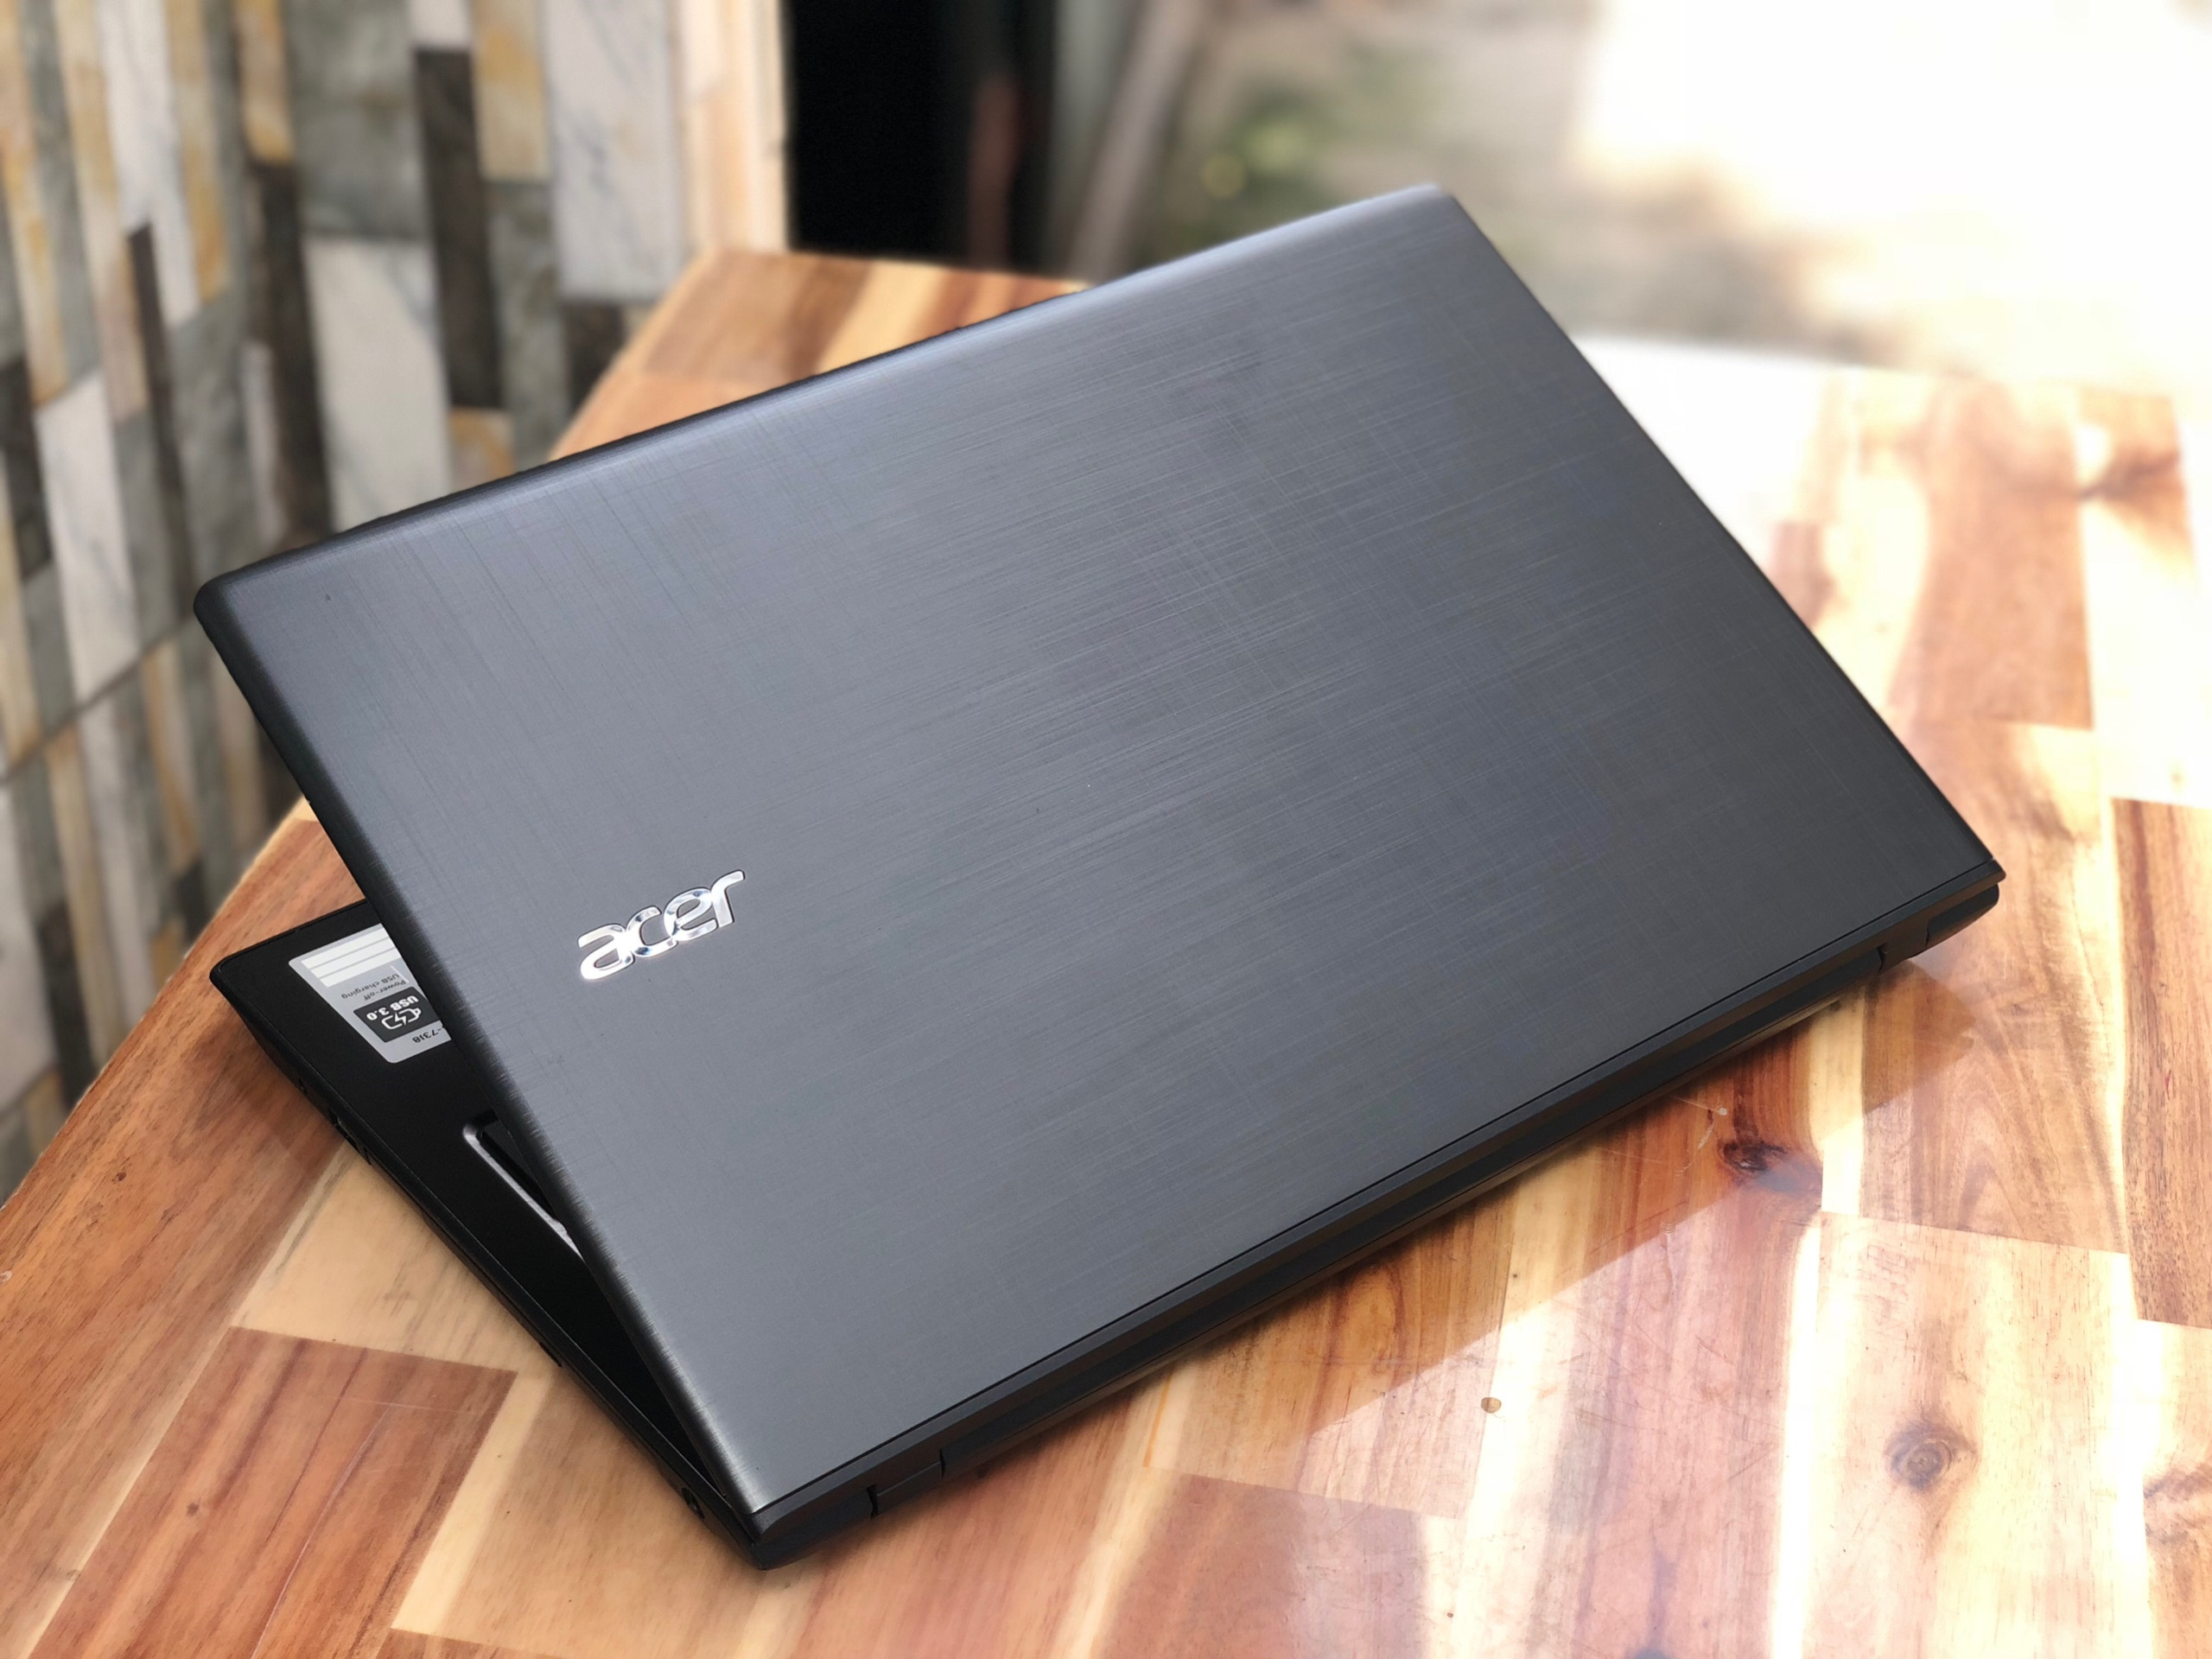 Laptop Acer E5-575G-39QW, i3 7100U 4G 500G Vga GT940MX Full HD Like new zin 100% Giá rẻ1